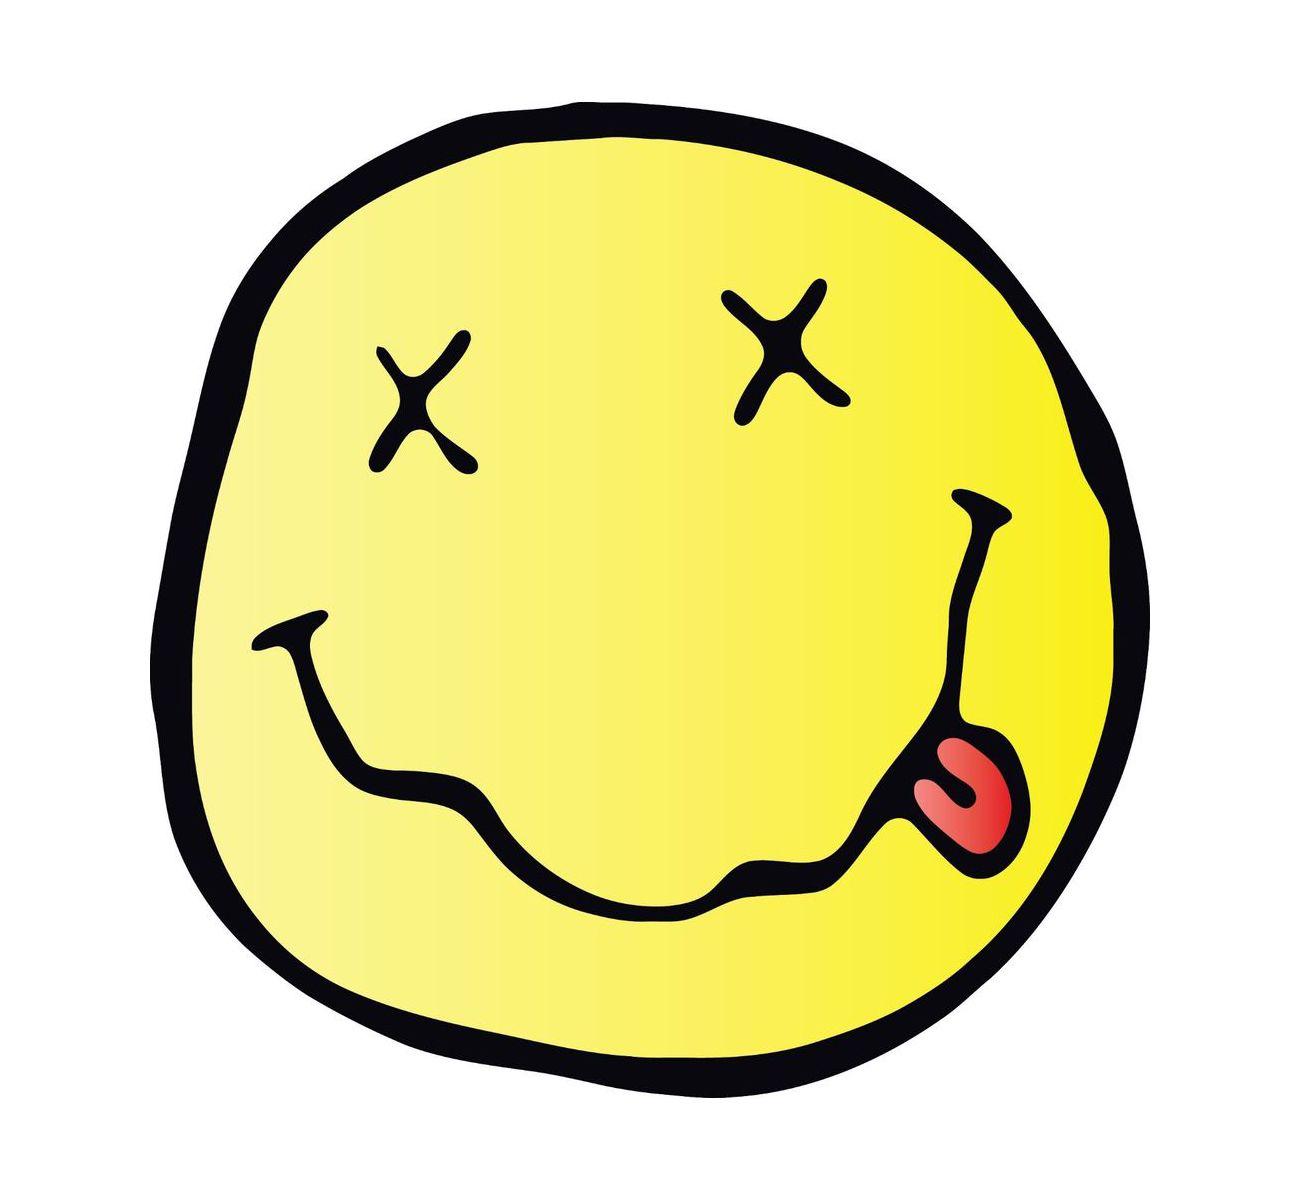 Nirvana Smiley Face Logo - Nirvana Logo, Nirvana Symbol Meaning, History and Evolution